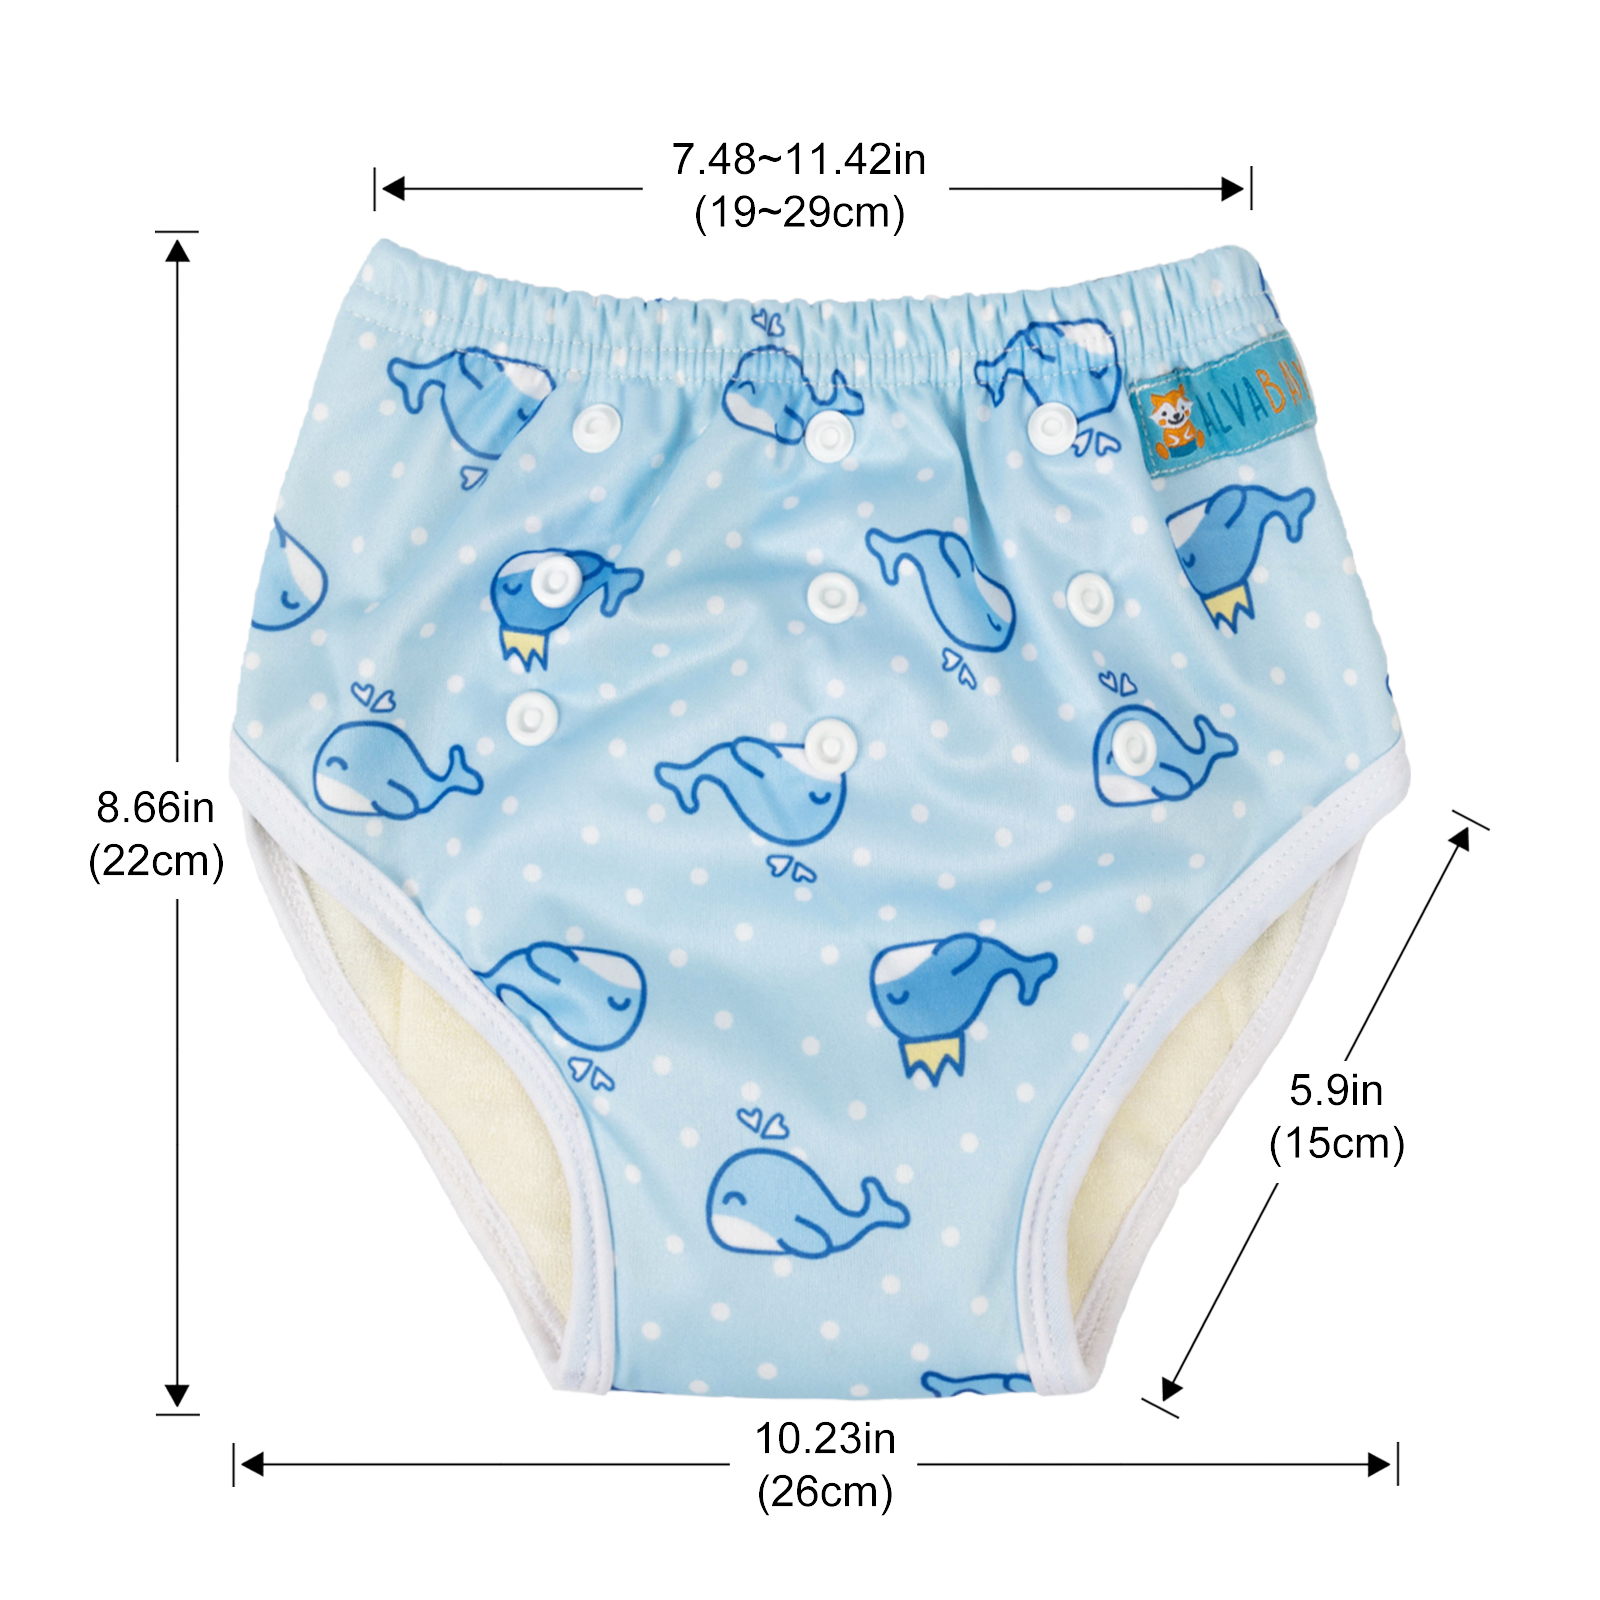 Buy Potty Training Pants Online |Padded Underwear for Kids by Snugkins